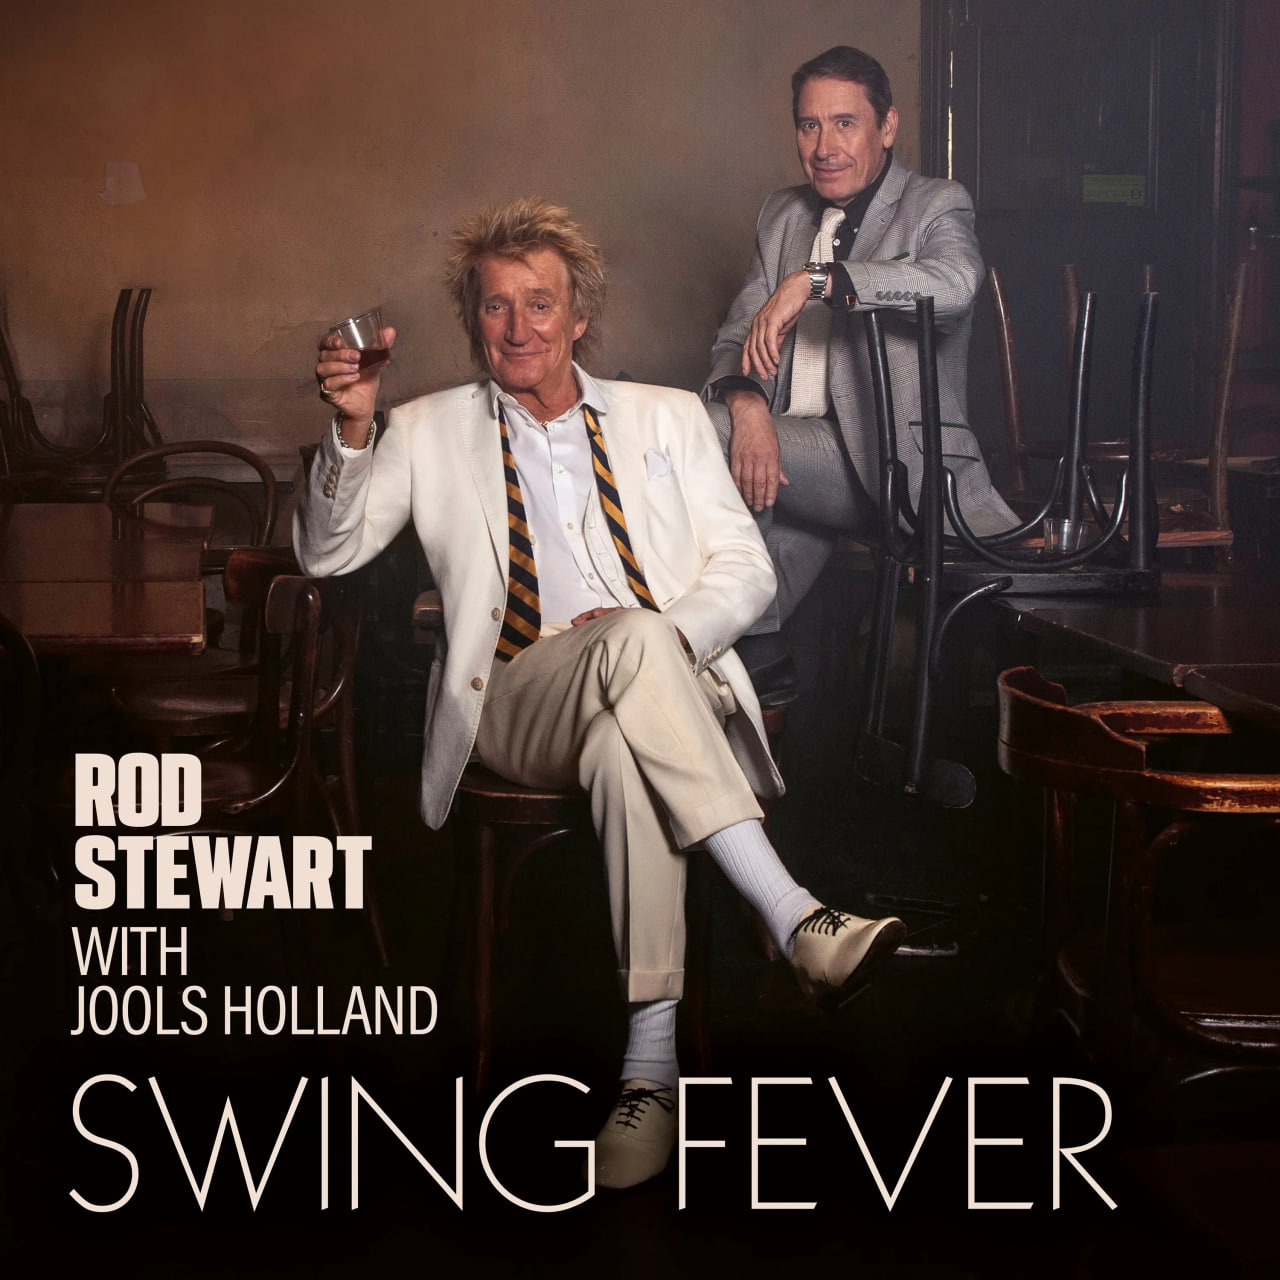 Джаз Warner Music Rod Stewart, Holland, Jools - Swing Fever (Green Vinyl LP) джаз warner music rod stewart holland jools swing fever green vinyl lp